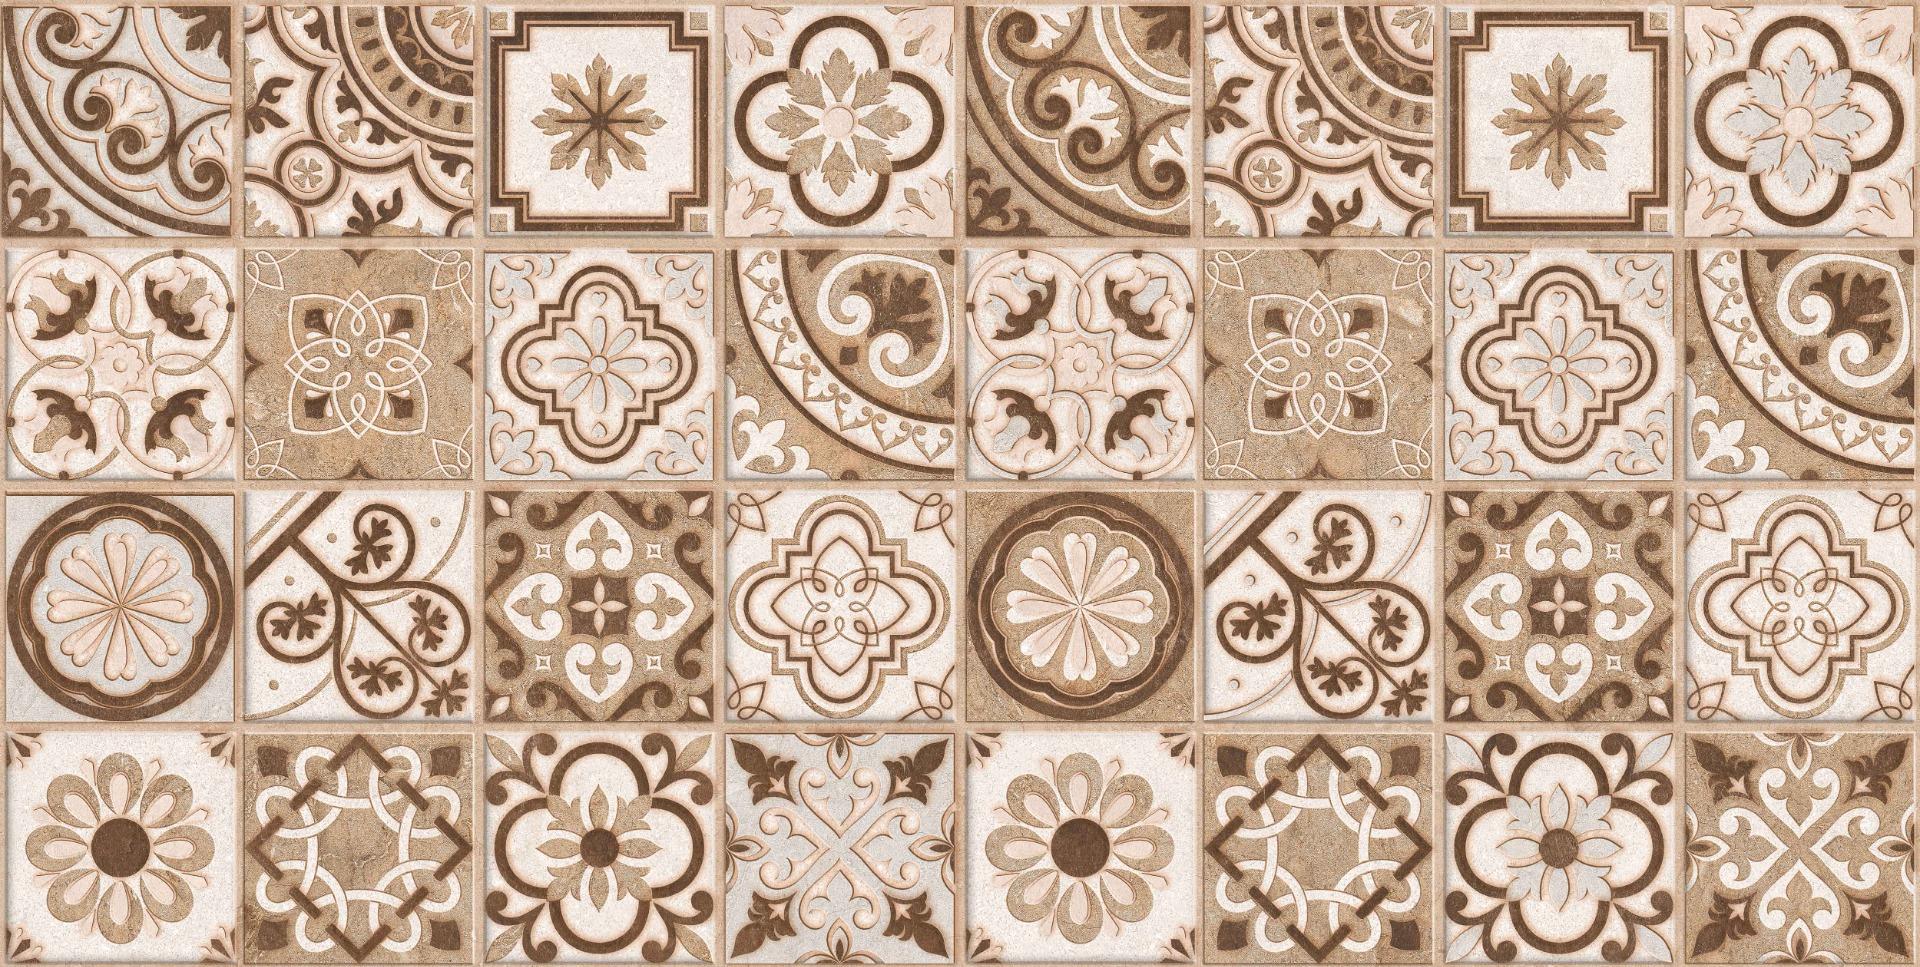 Floor Tiles for Bathroom Tiles, Living Room Tiles, Kitchen Tiles, Bedroom Tiles, Accent Tiles, Bar/Restaurant